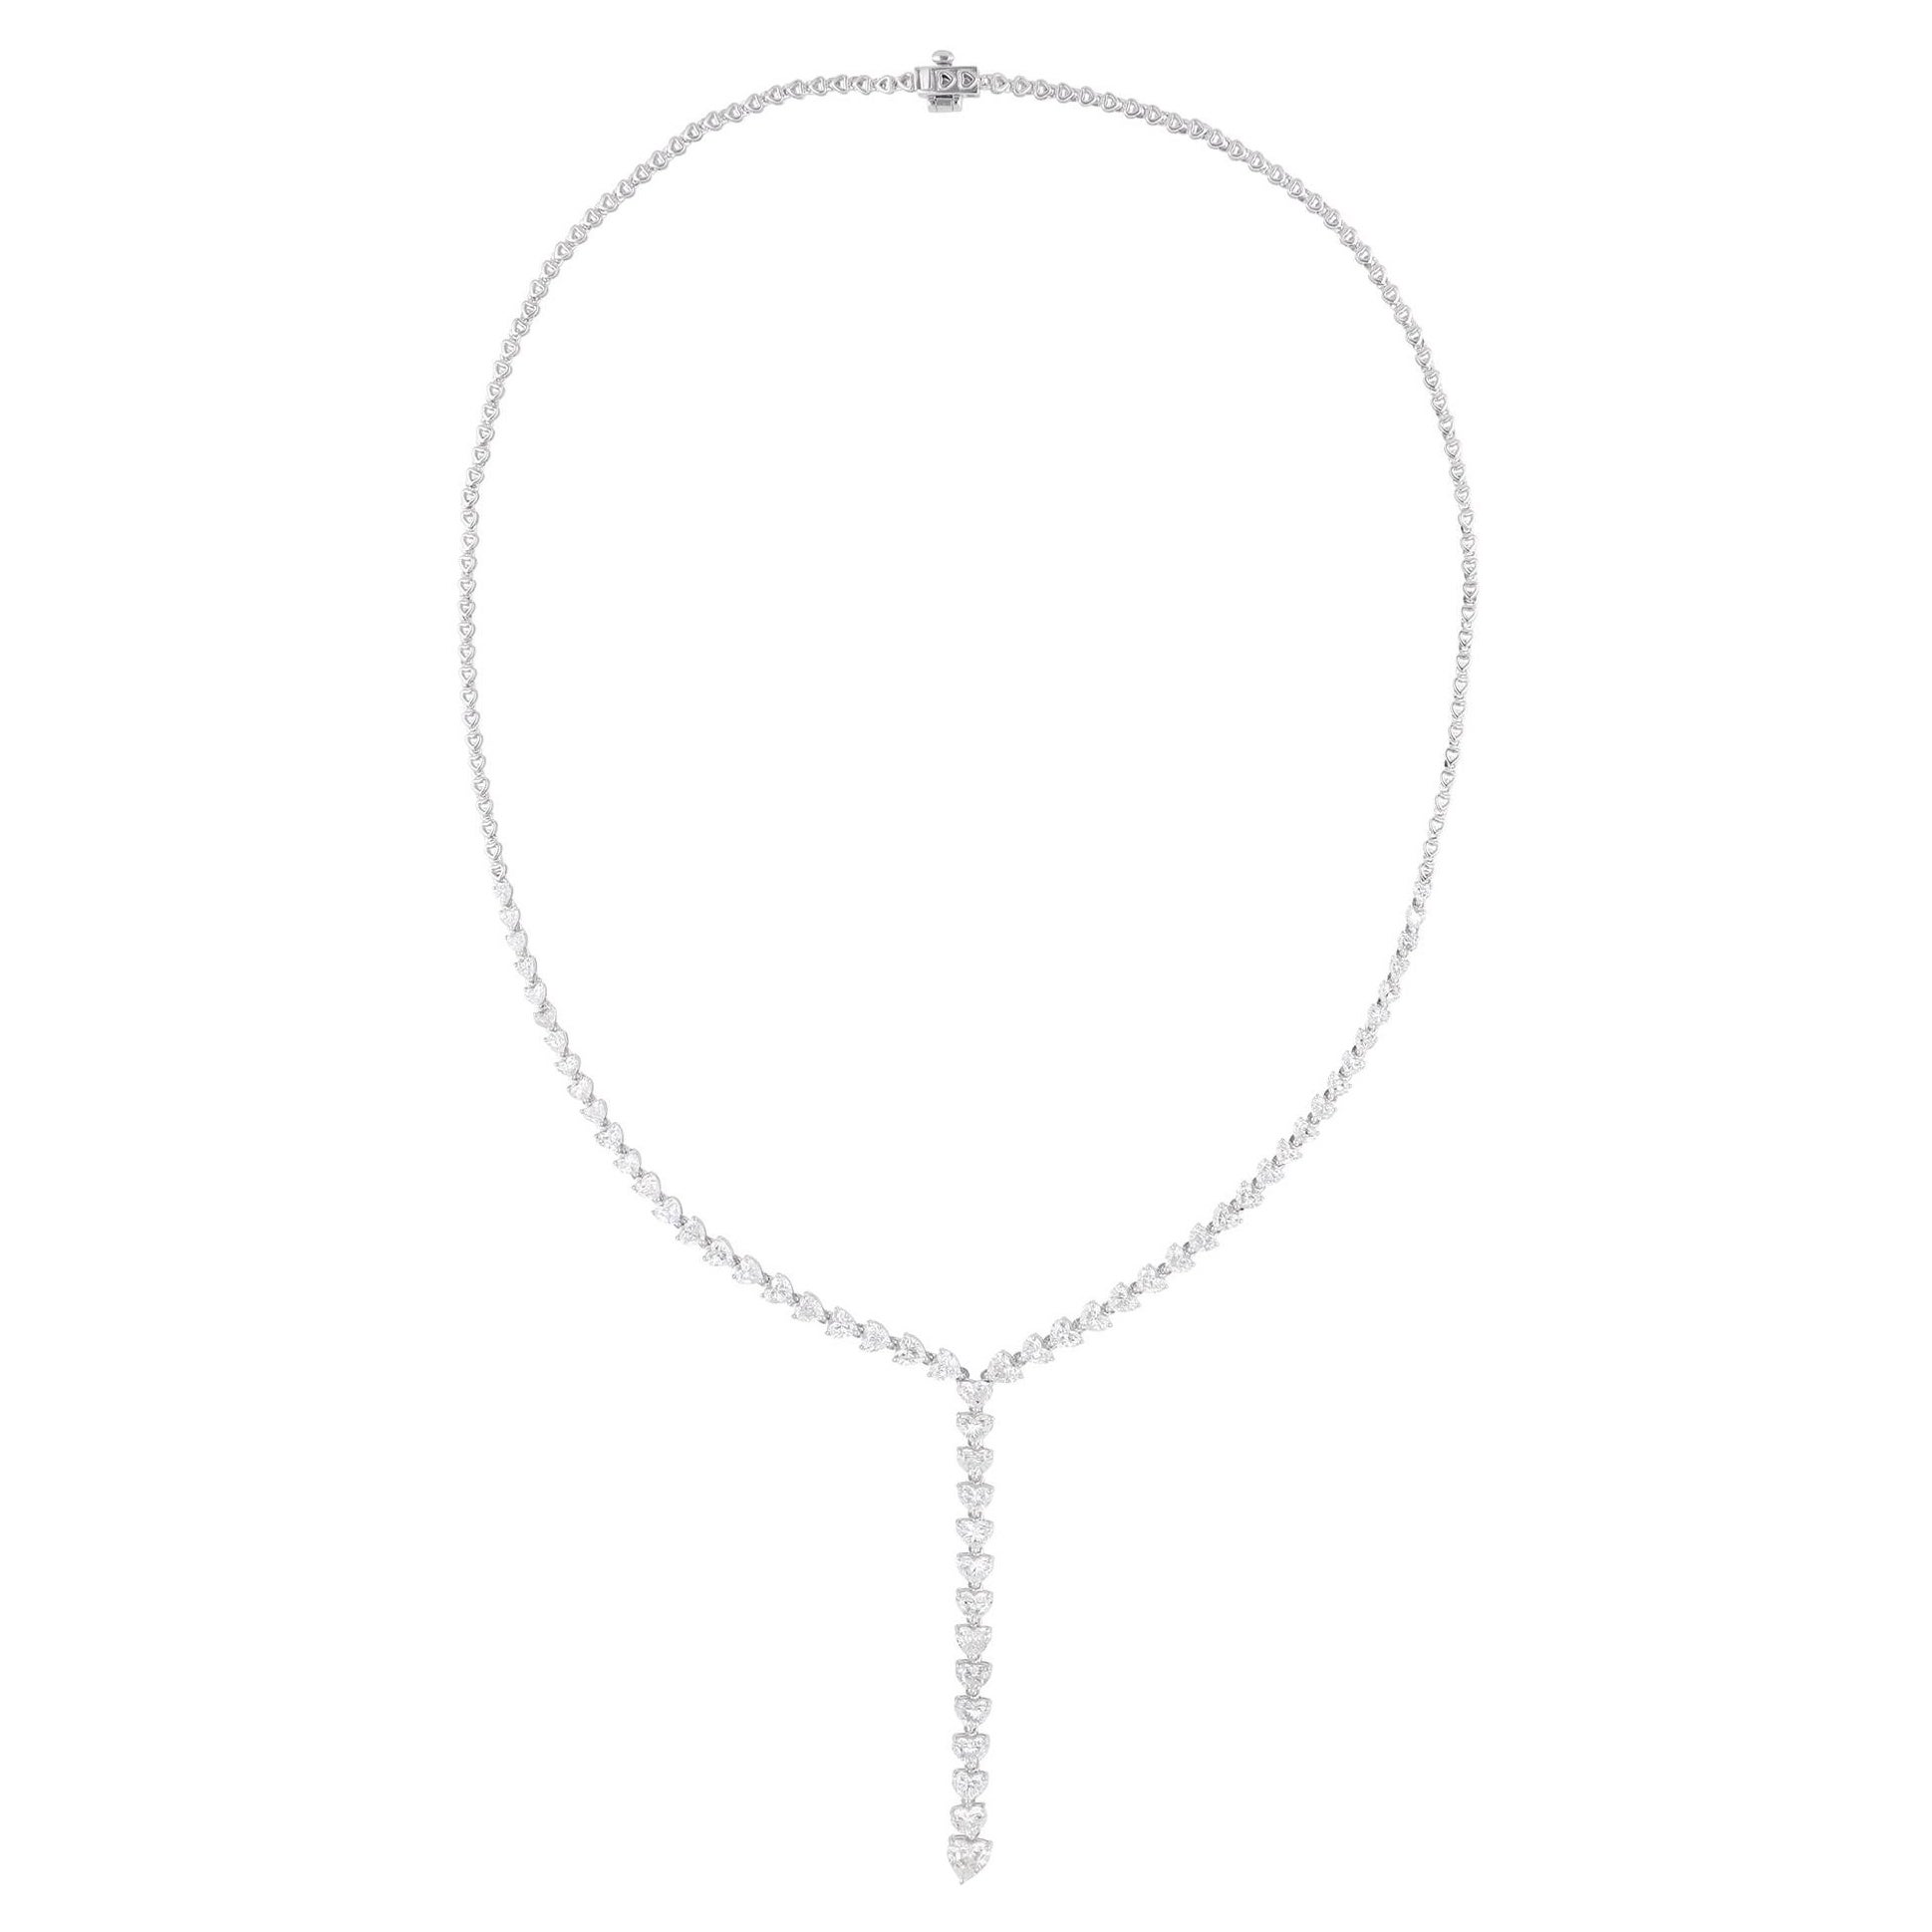 Real 6.84 Carat Heart Shape Diamond Lariat Necklace 18 Karat White Gold Jewelry